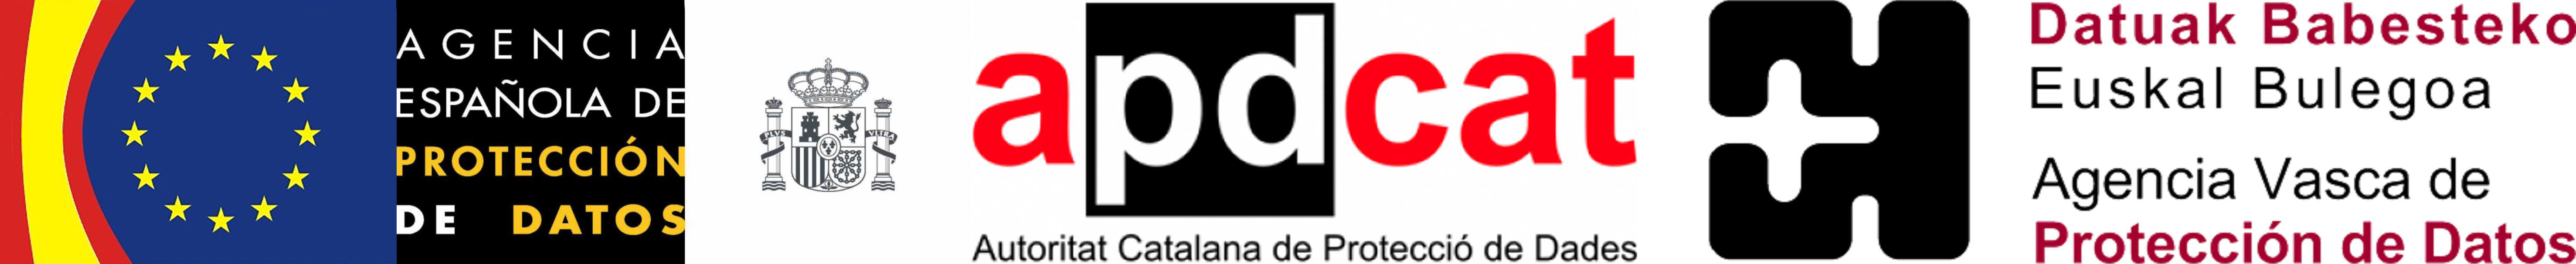 Logo Spanish Agency for Data Protection, Catalan Protection Authority of Dades and Datuak Babesteko Euskal Bulegoa